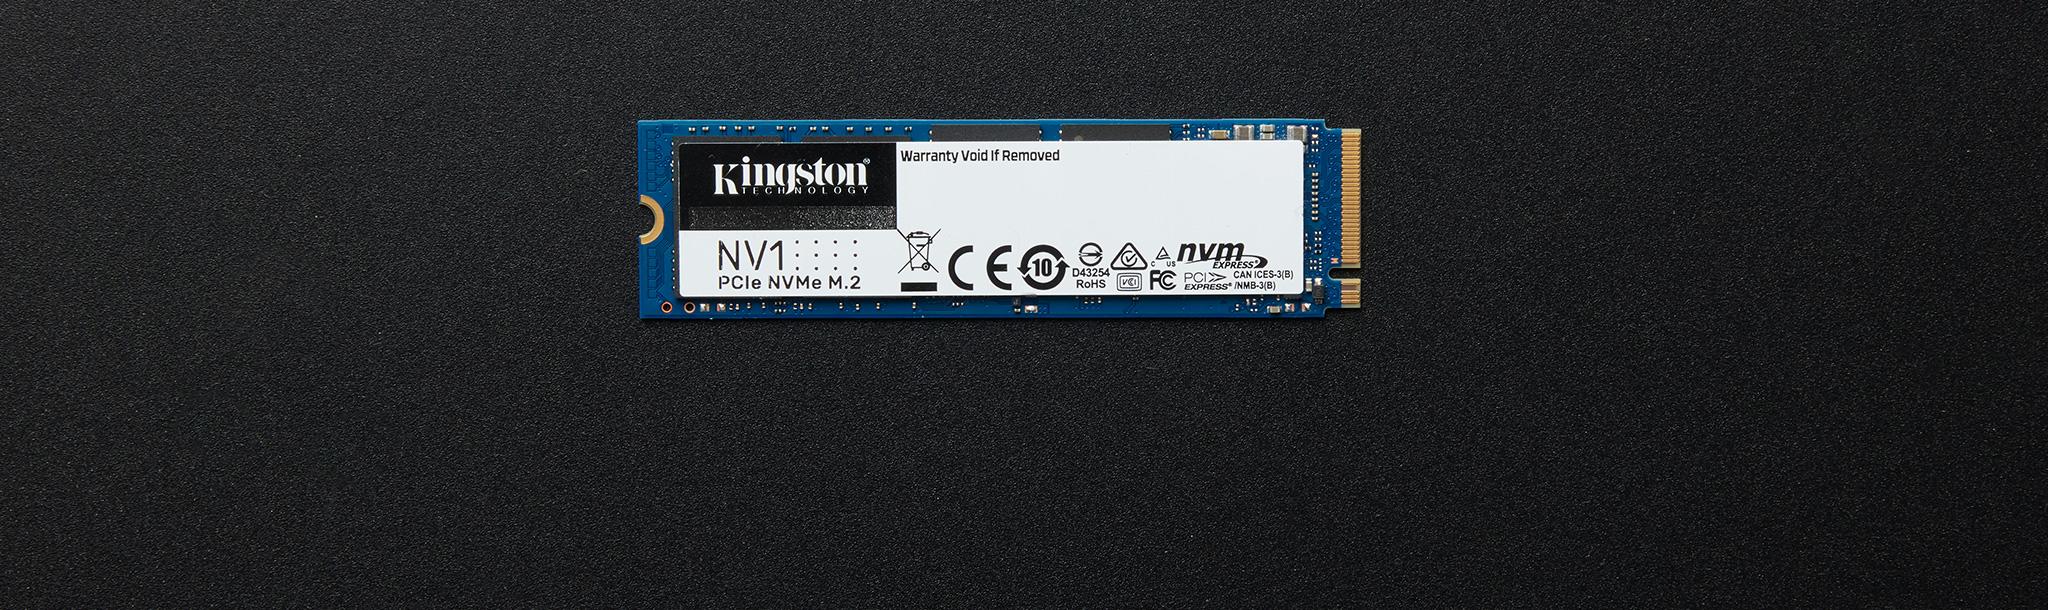 Disco sólido SSD 500GB Kingston con Rendimiento PCIe NVMe